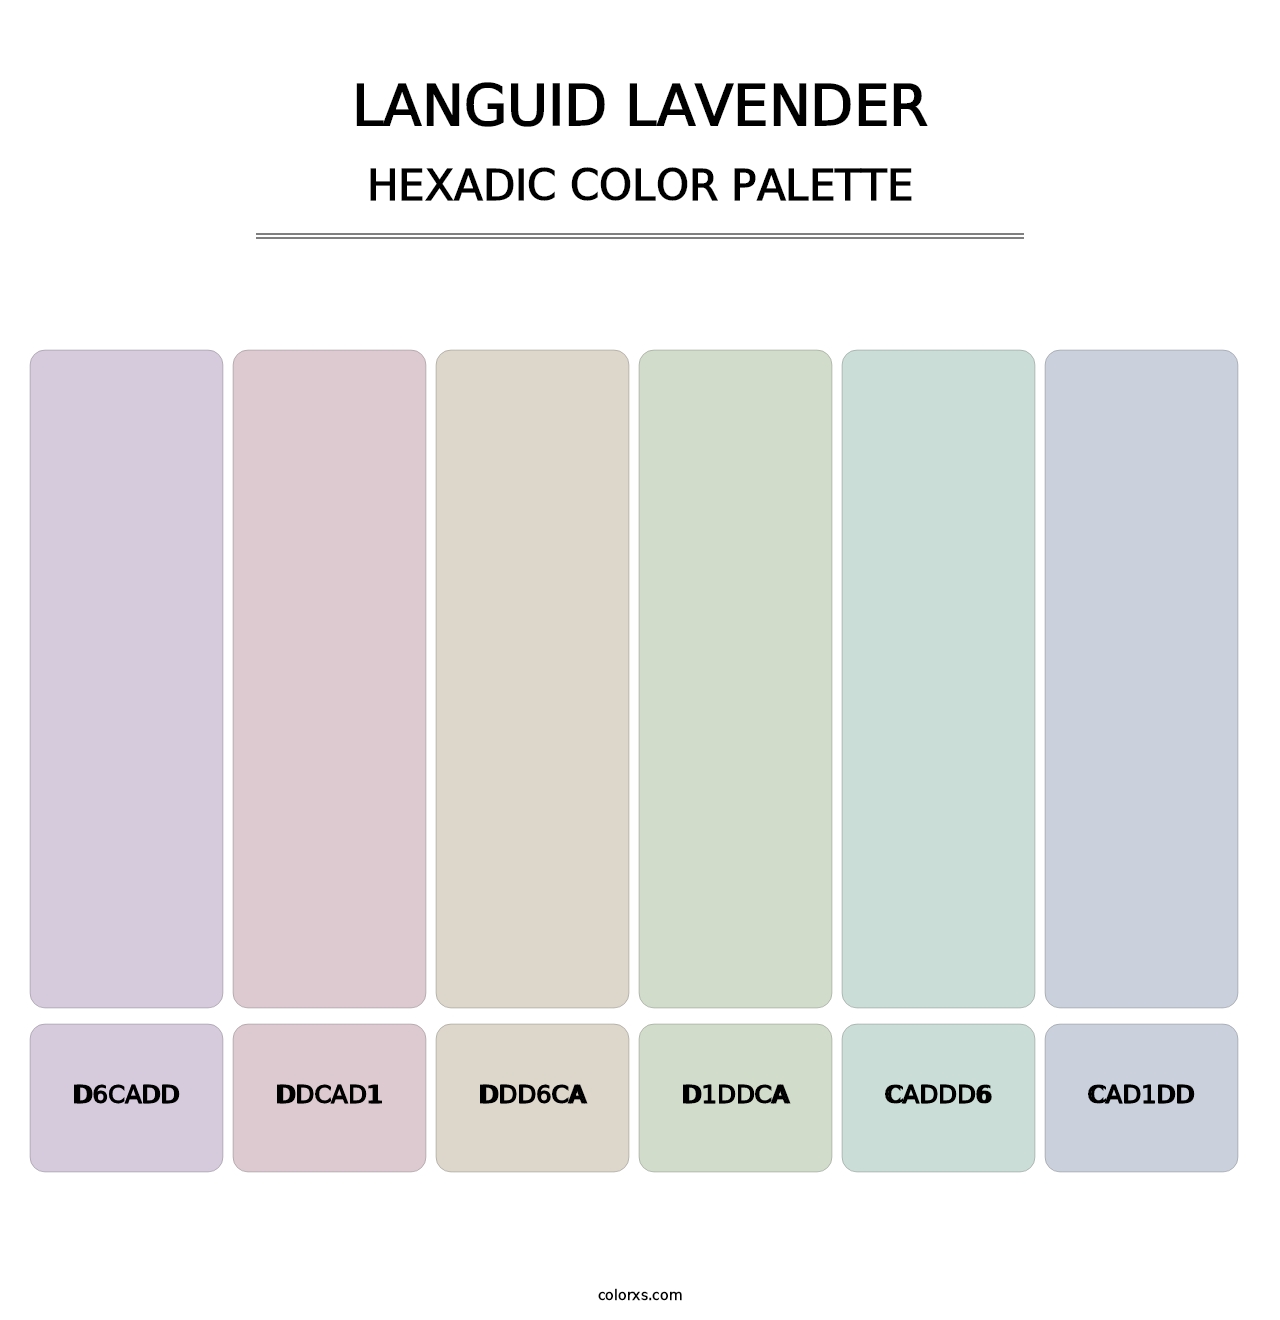 Languid Lavender - Hexadic Color Palette